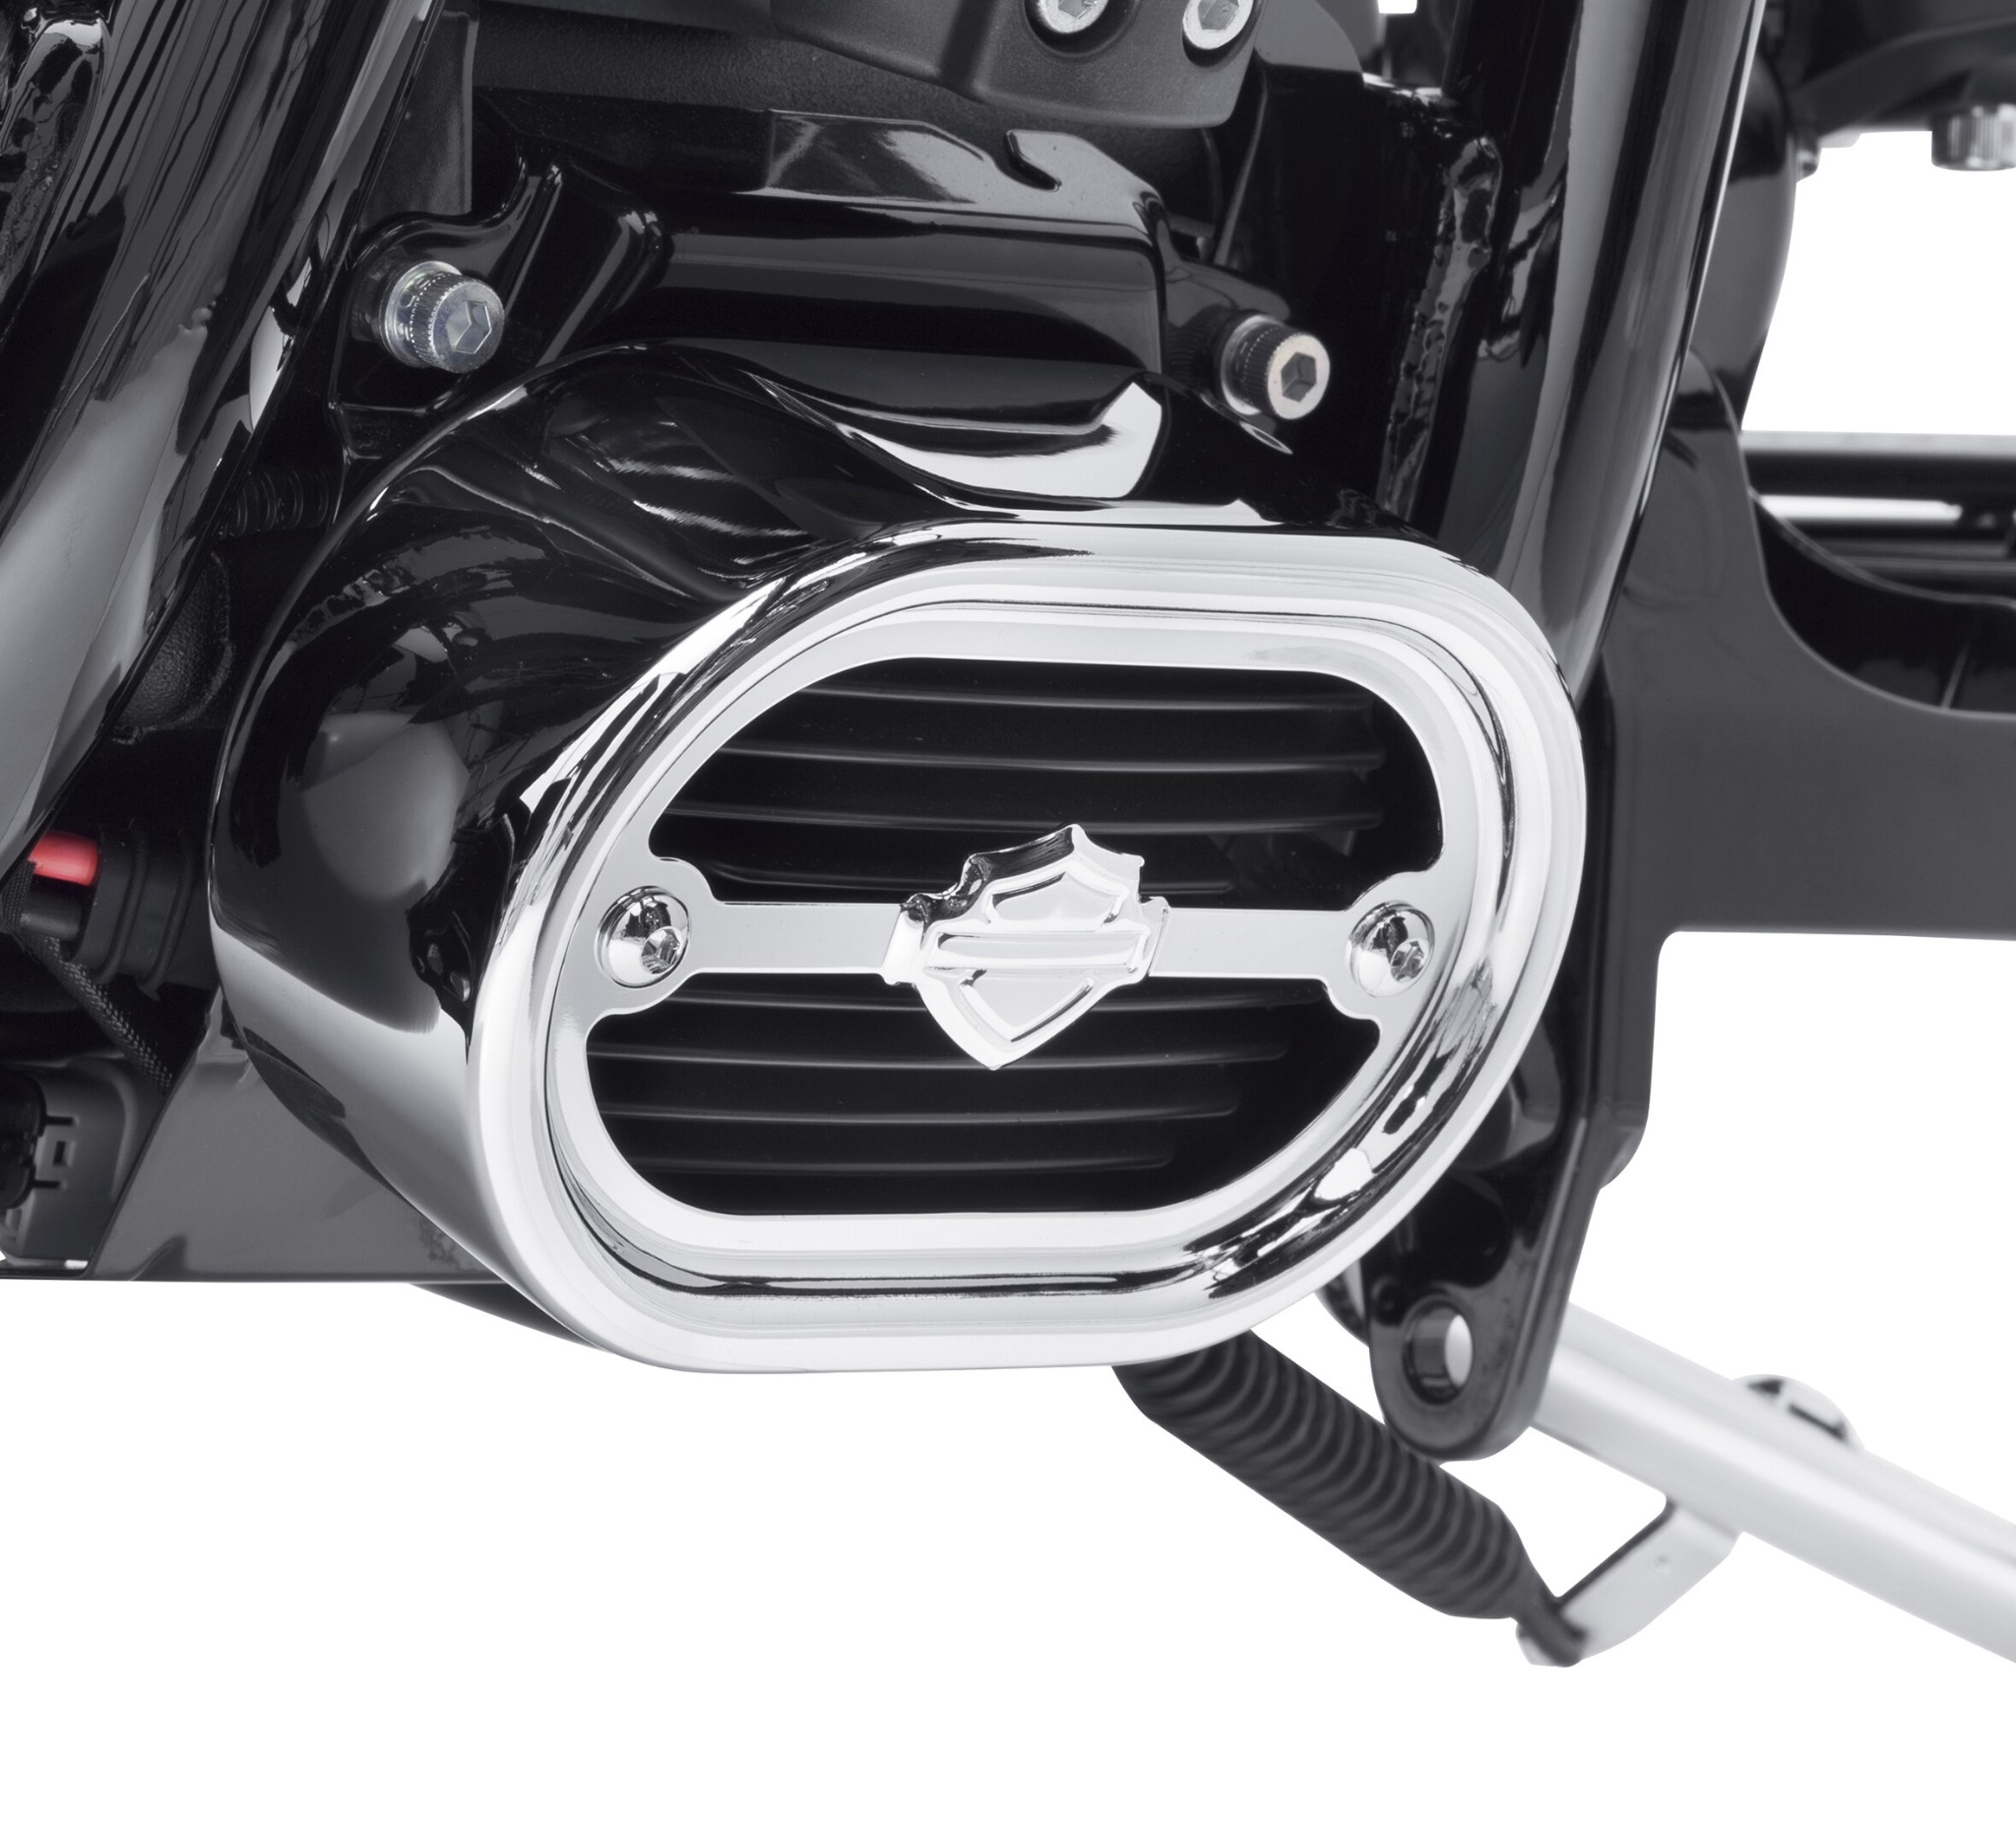 HD Chrome Voltage Regulator Rectifier Harley Davidson Rocker C 2008-2010